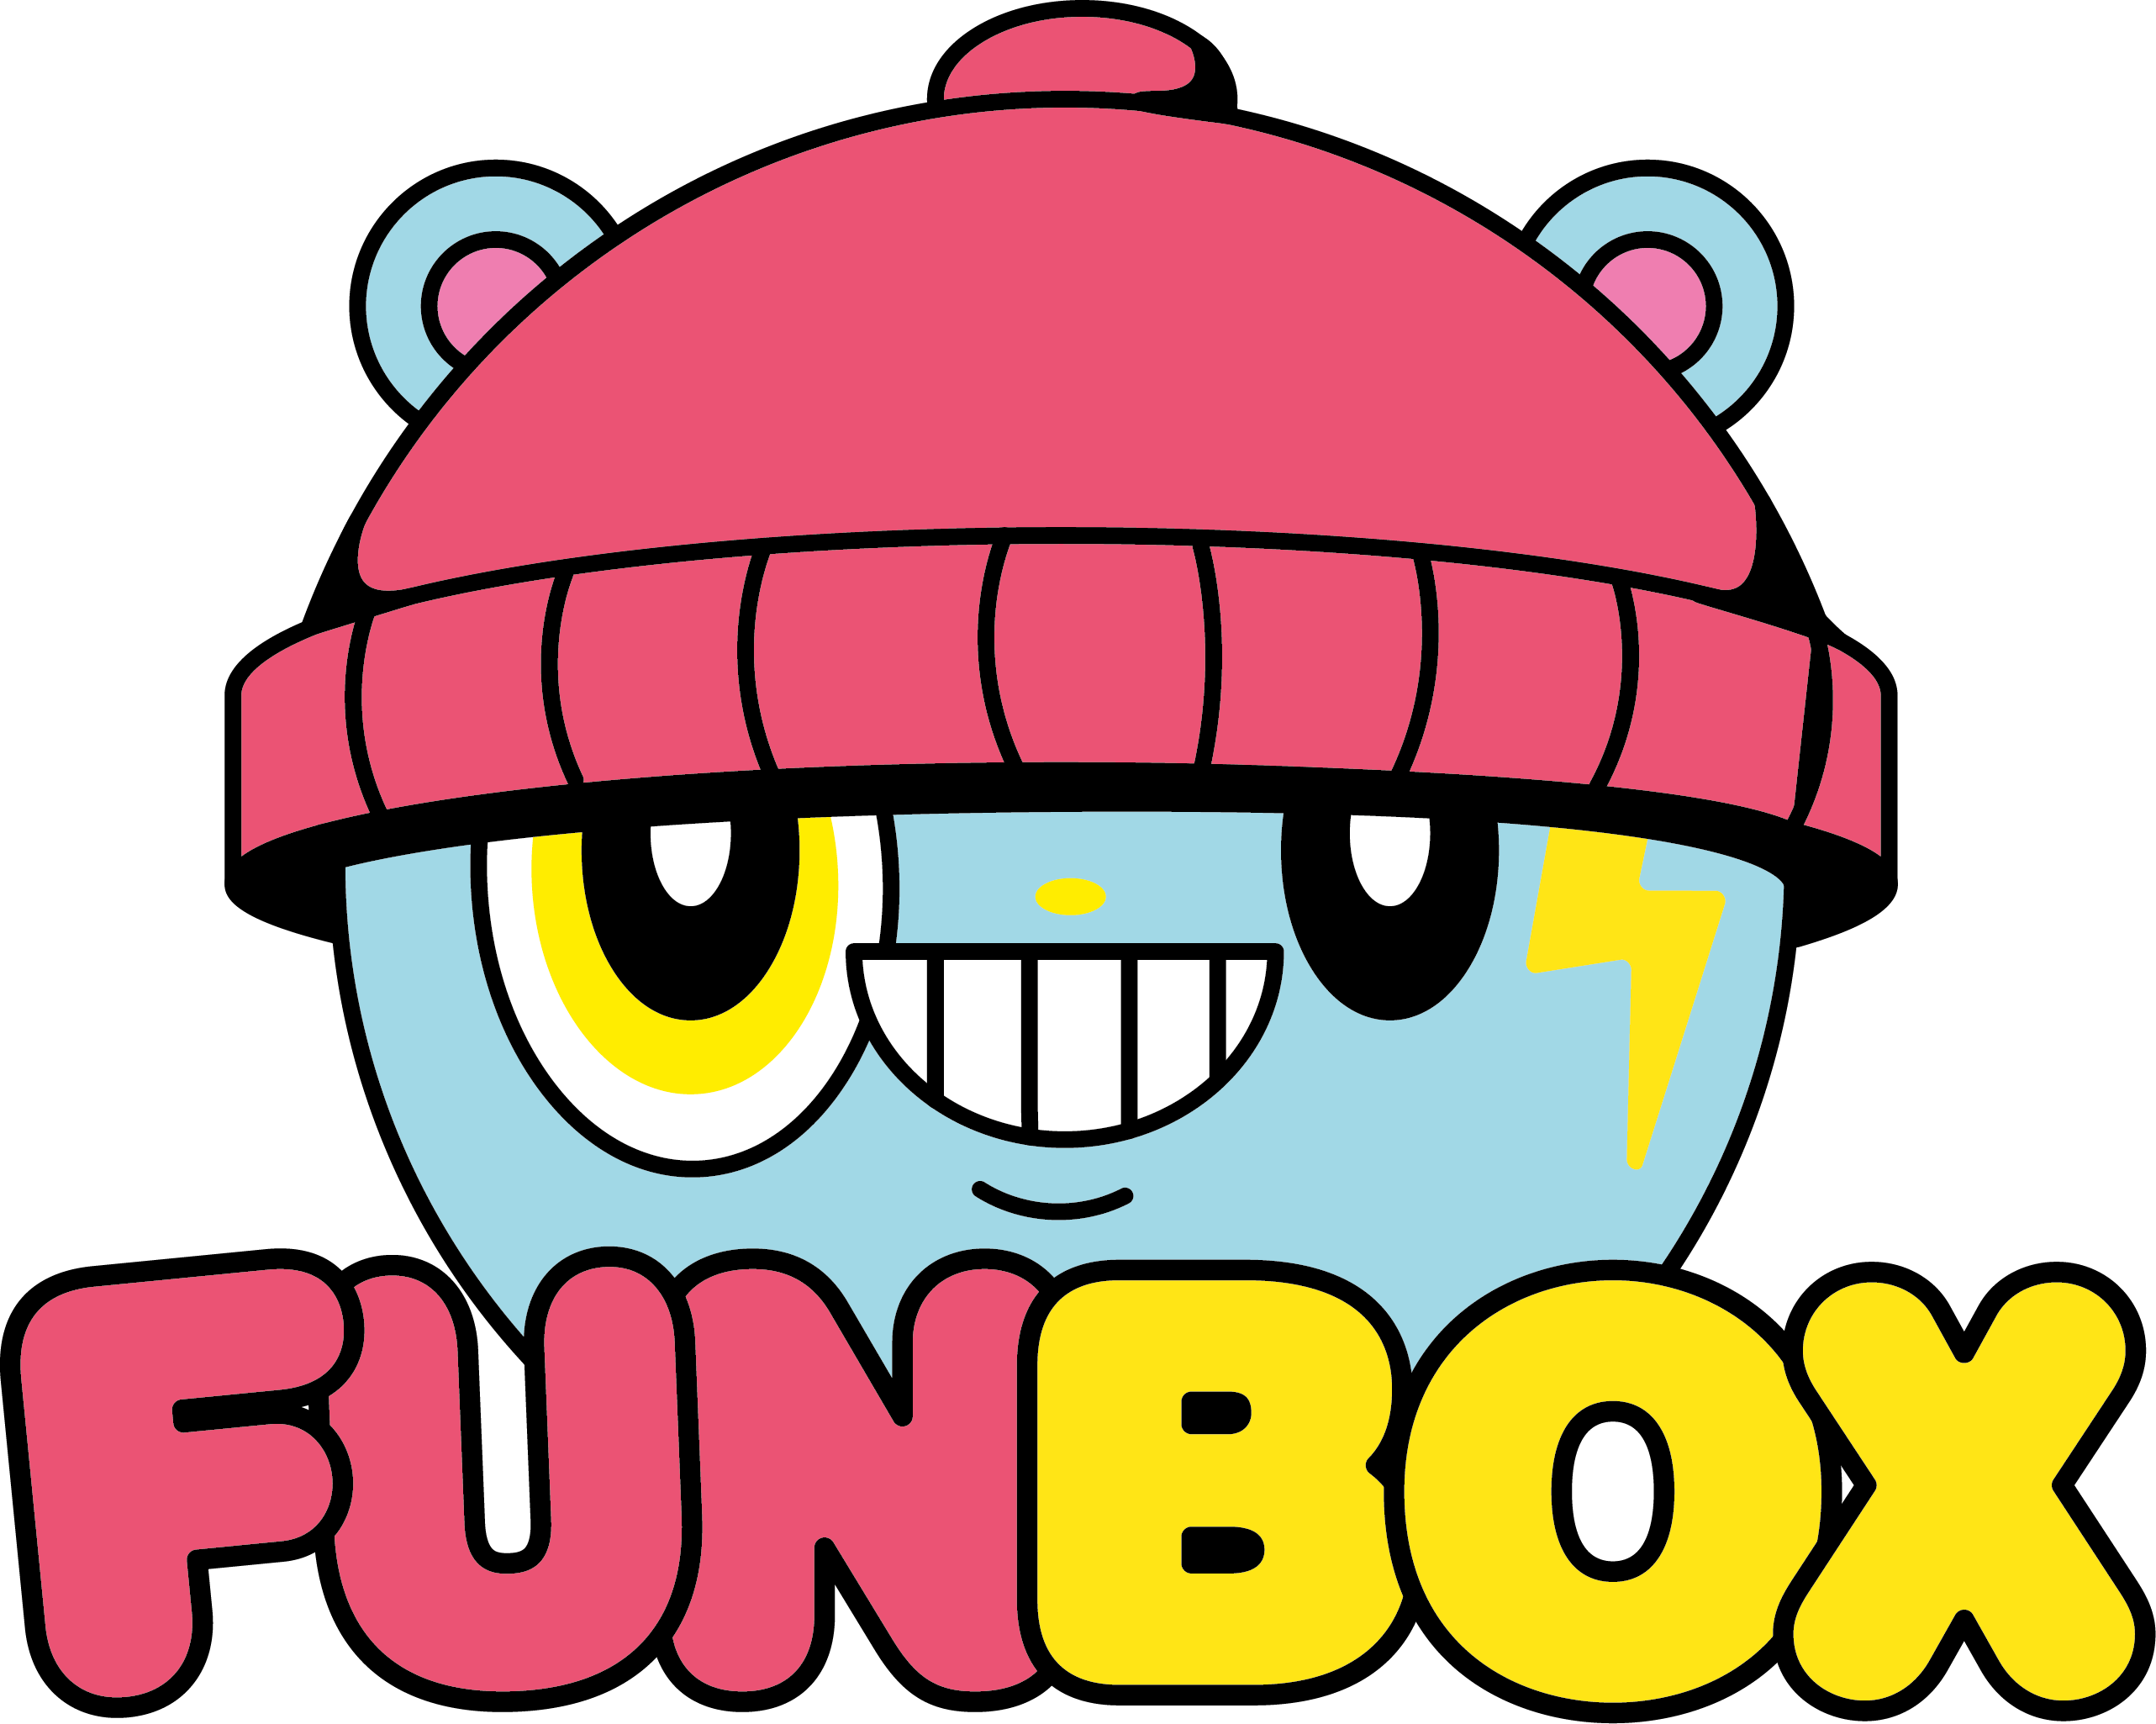 Funbox logo